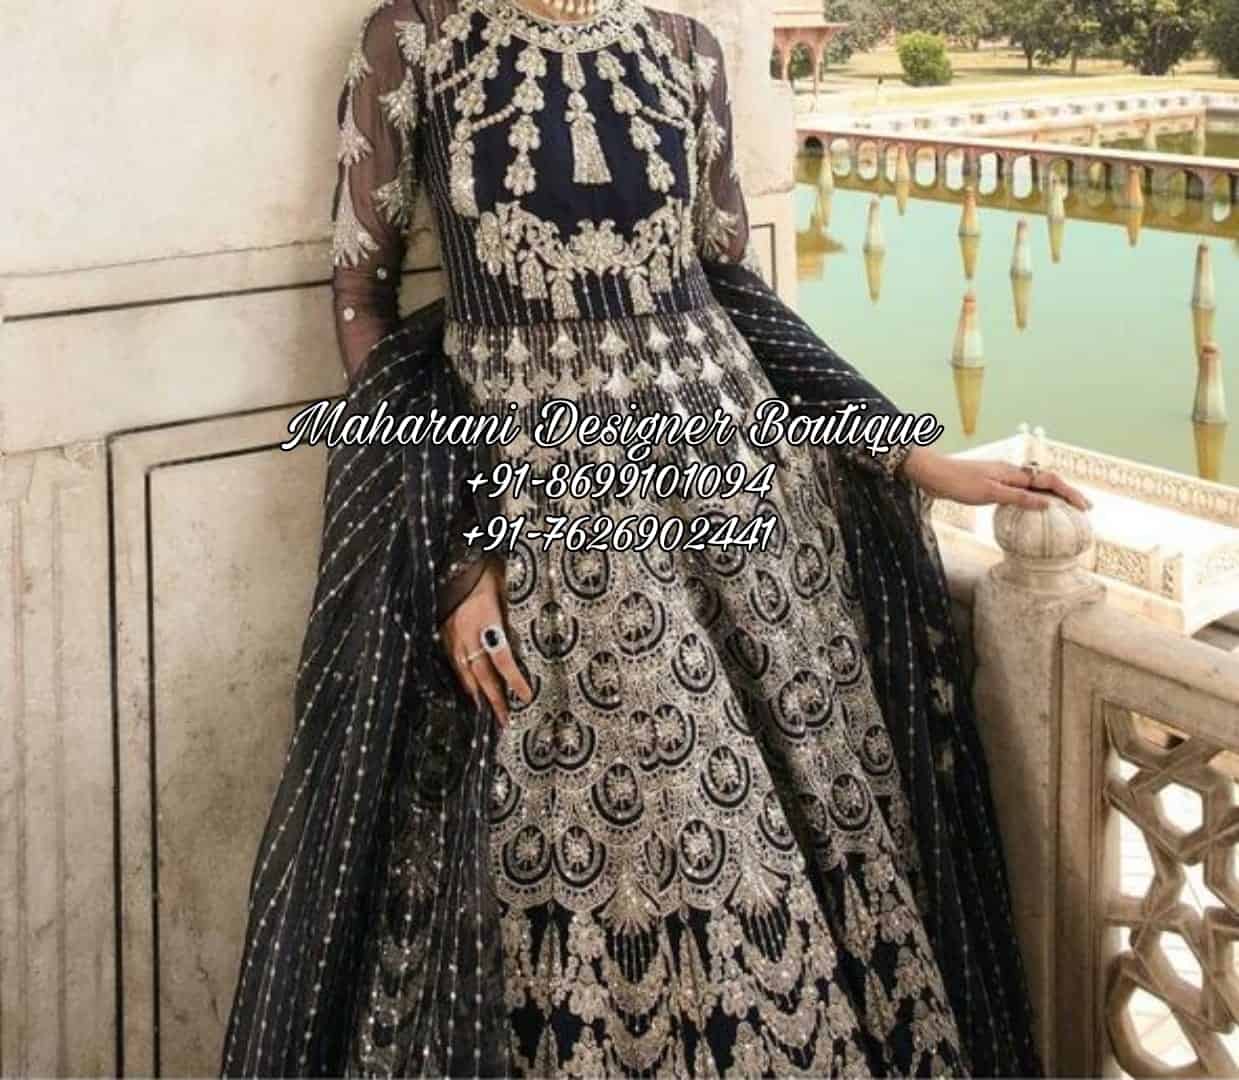 Dressed by Dhananjaya Bandara | Indian bride dresses, Indian style wedding  dress, Designer wedding dresses